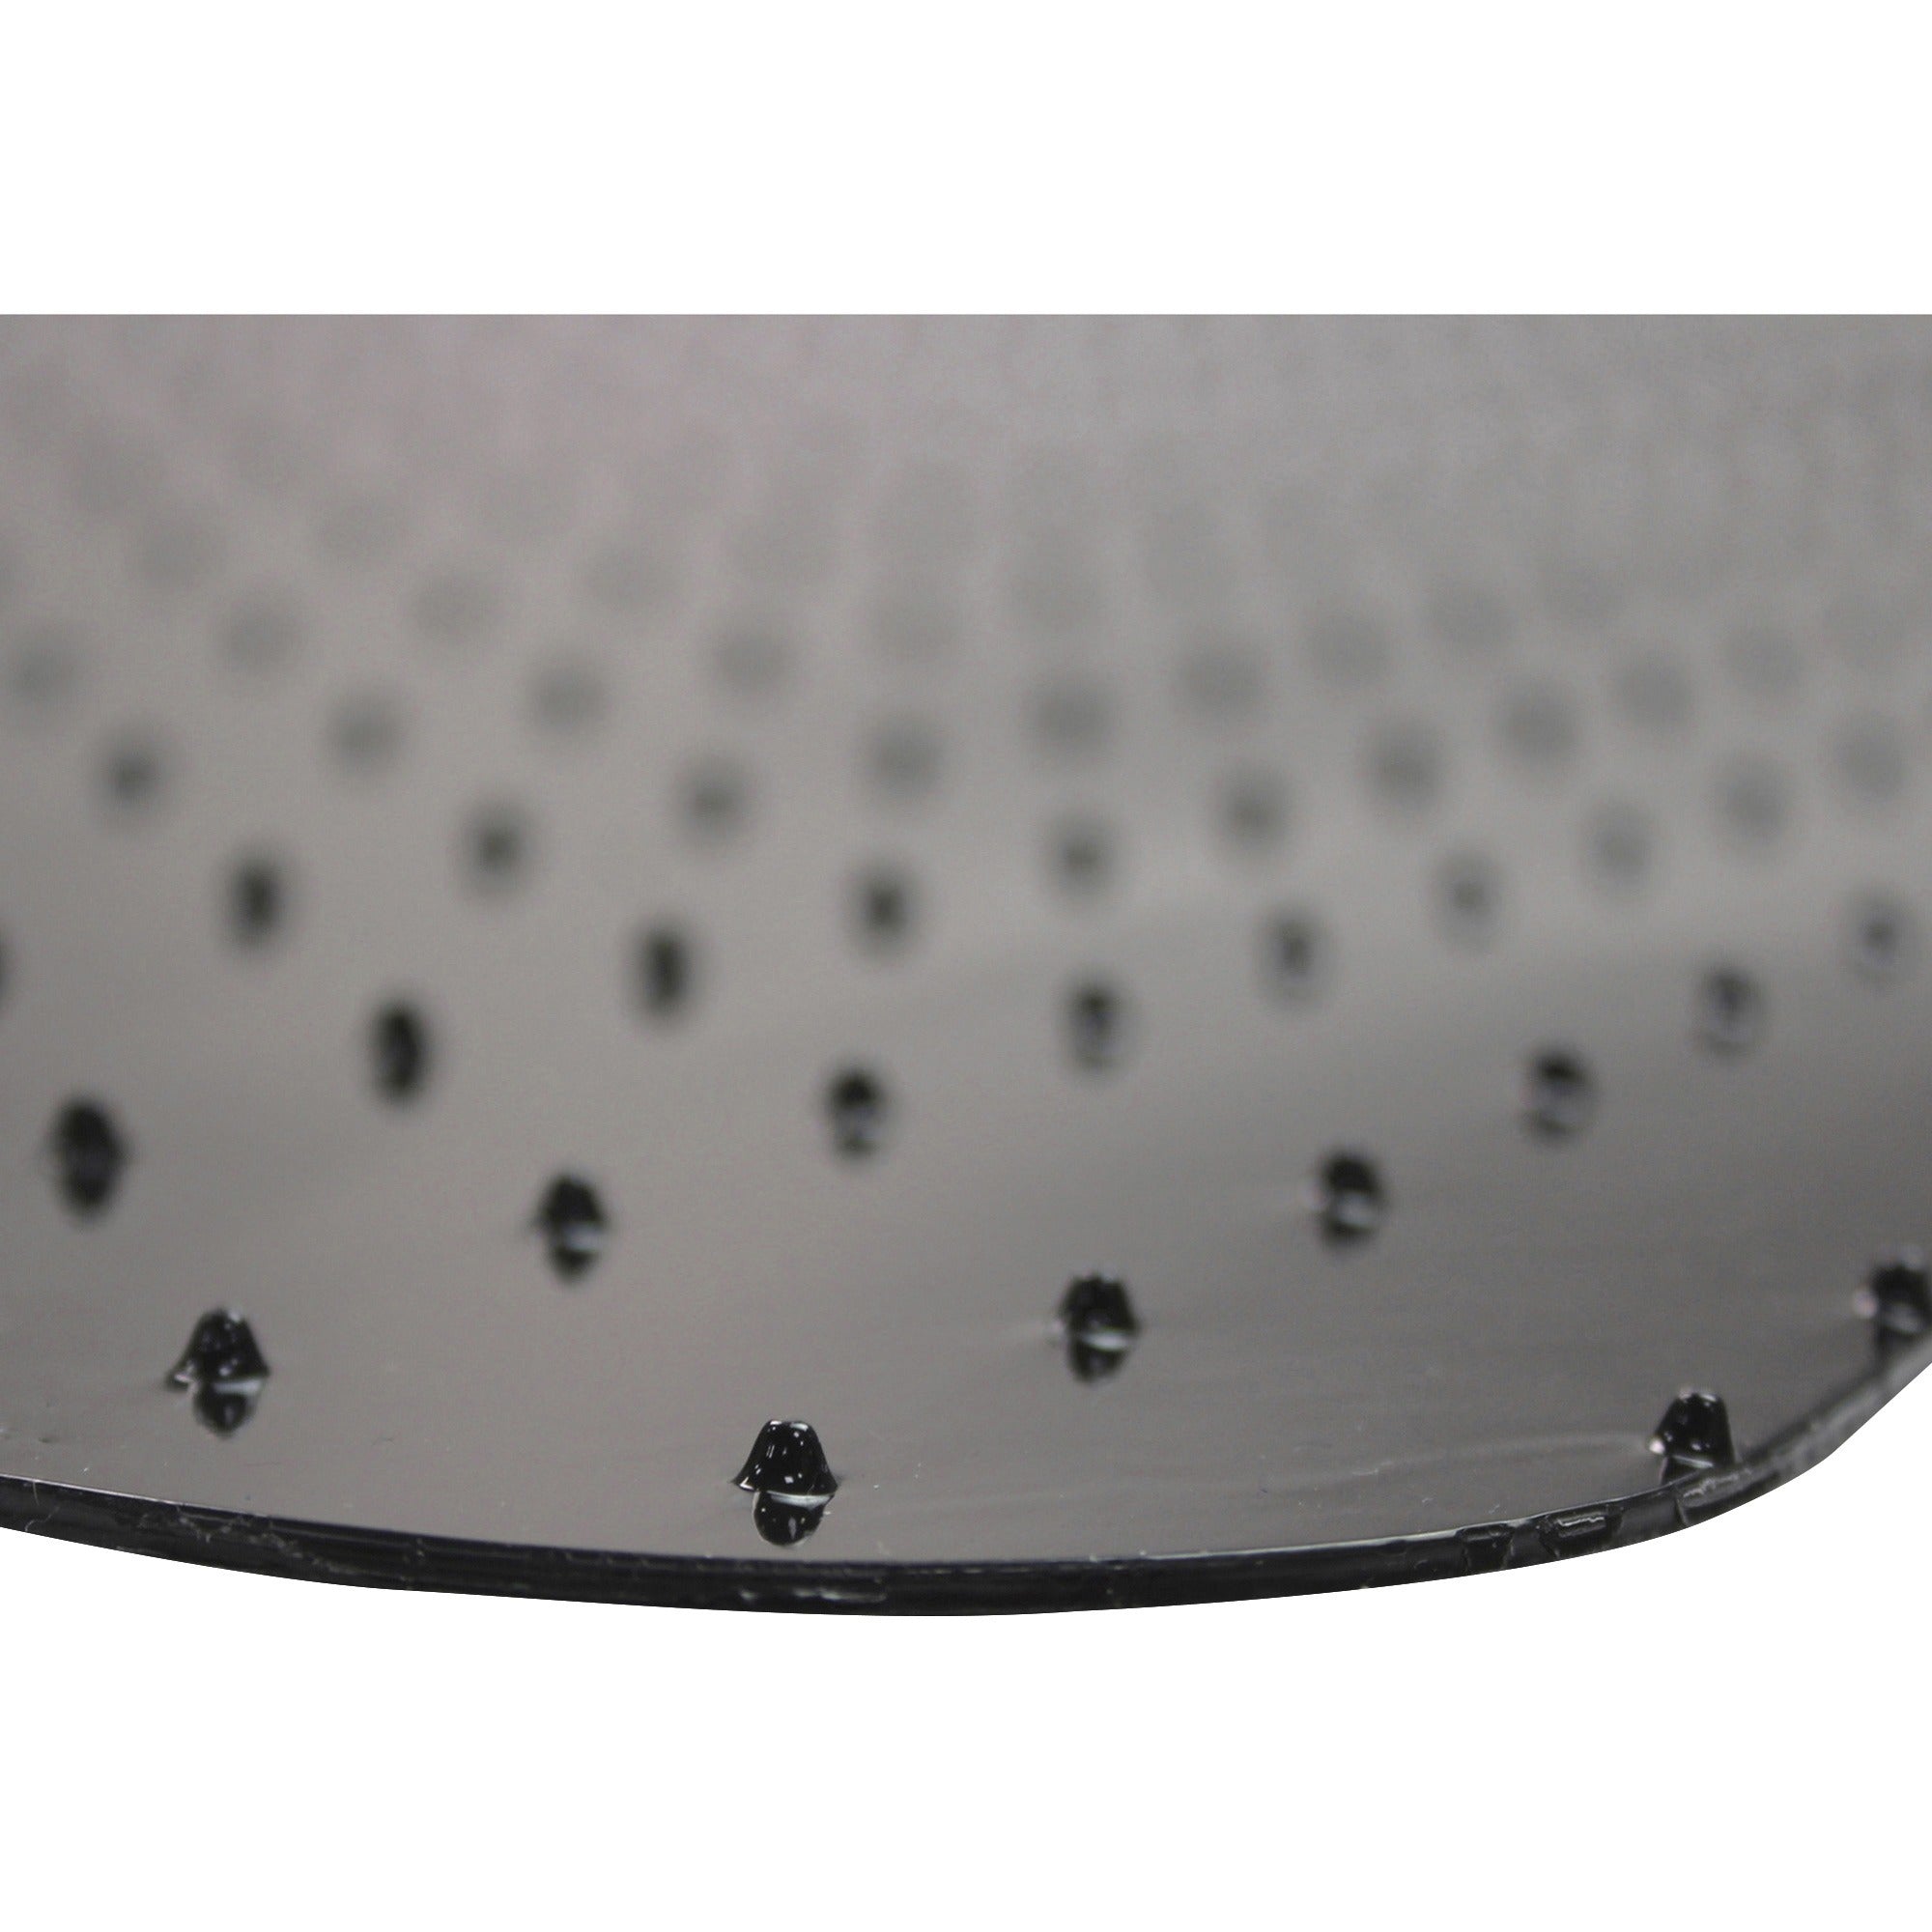 advantagemat-black-vinyl-rectangular-chair-mat-for-carpets-48-x-60-carpeted-floor-60-length-x-48-width-x-0090-depth-x-0090-thickness-rectangular-classic-polyvinyl-chloride-pvc-vinyl-black-1each-taa-compliant_flrfc114860lebv - 1